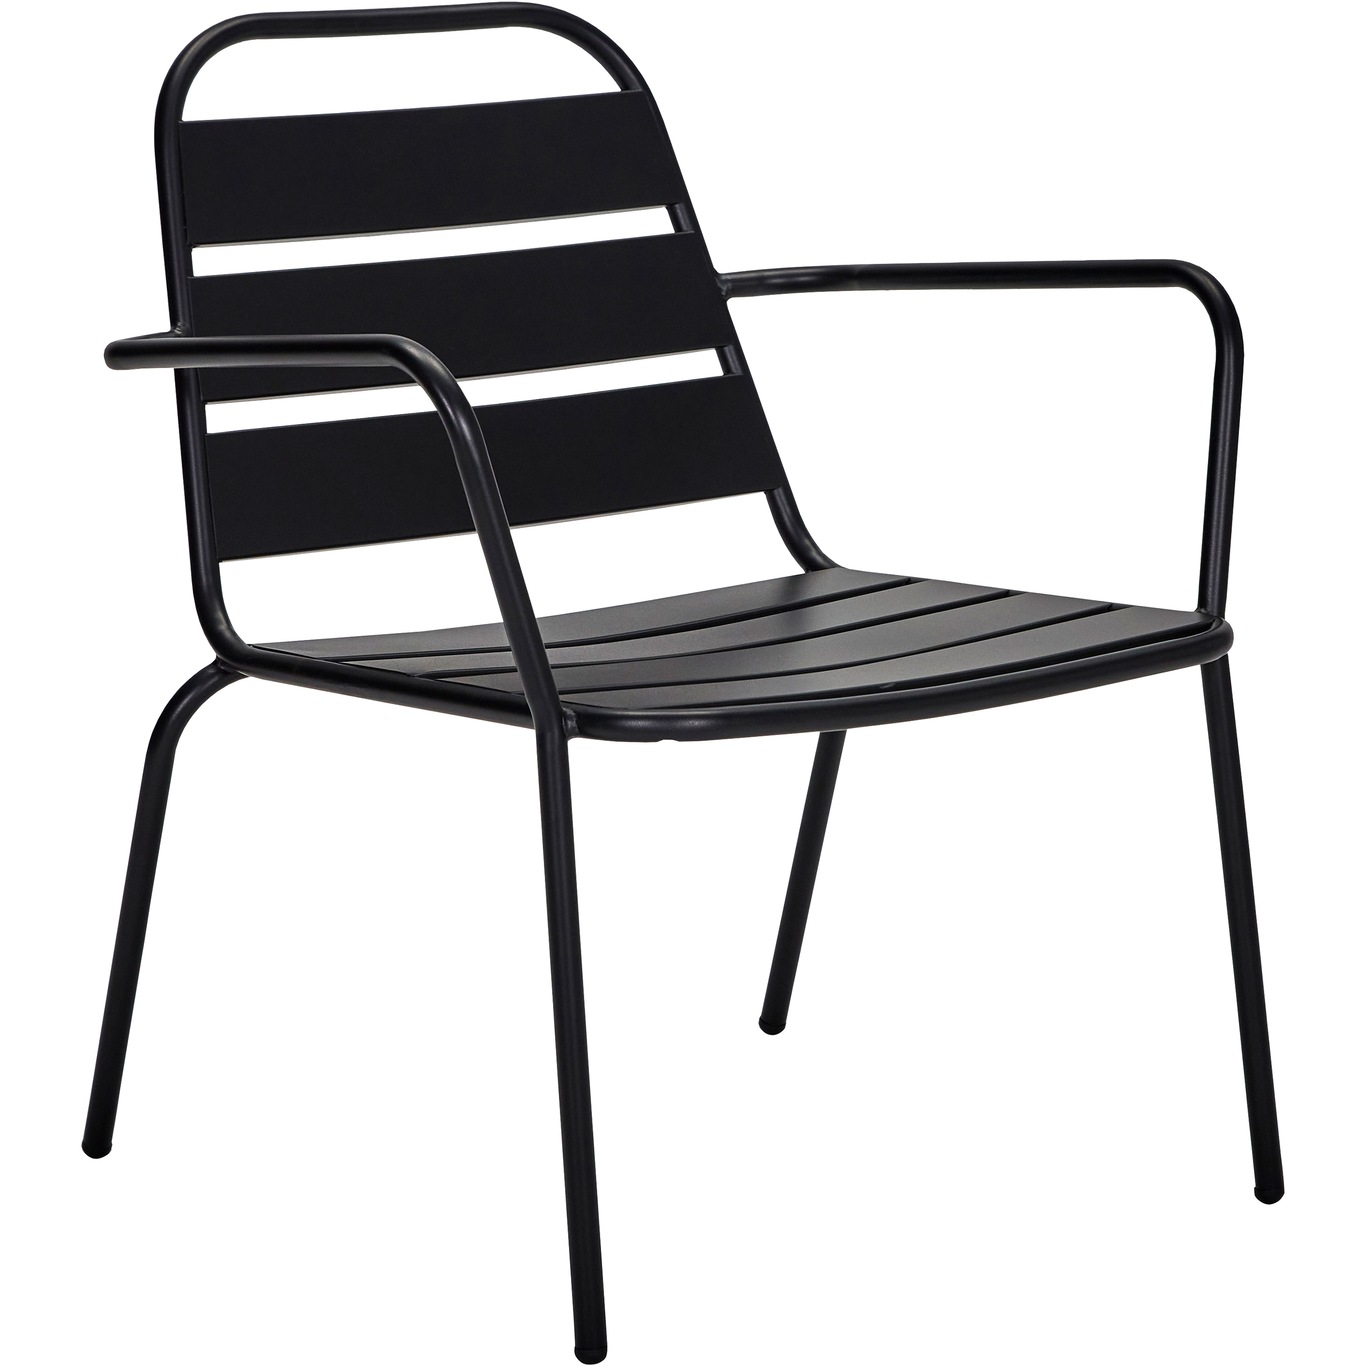 HDHelo Lounge Chair, Black